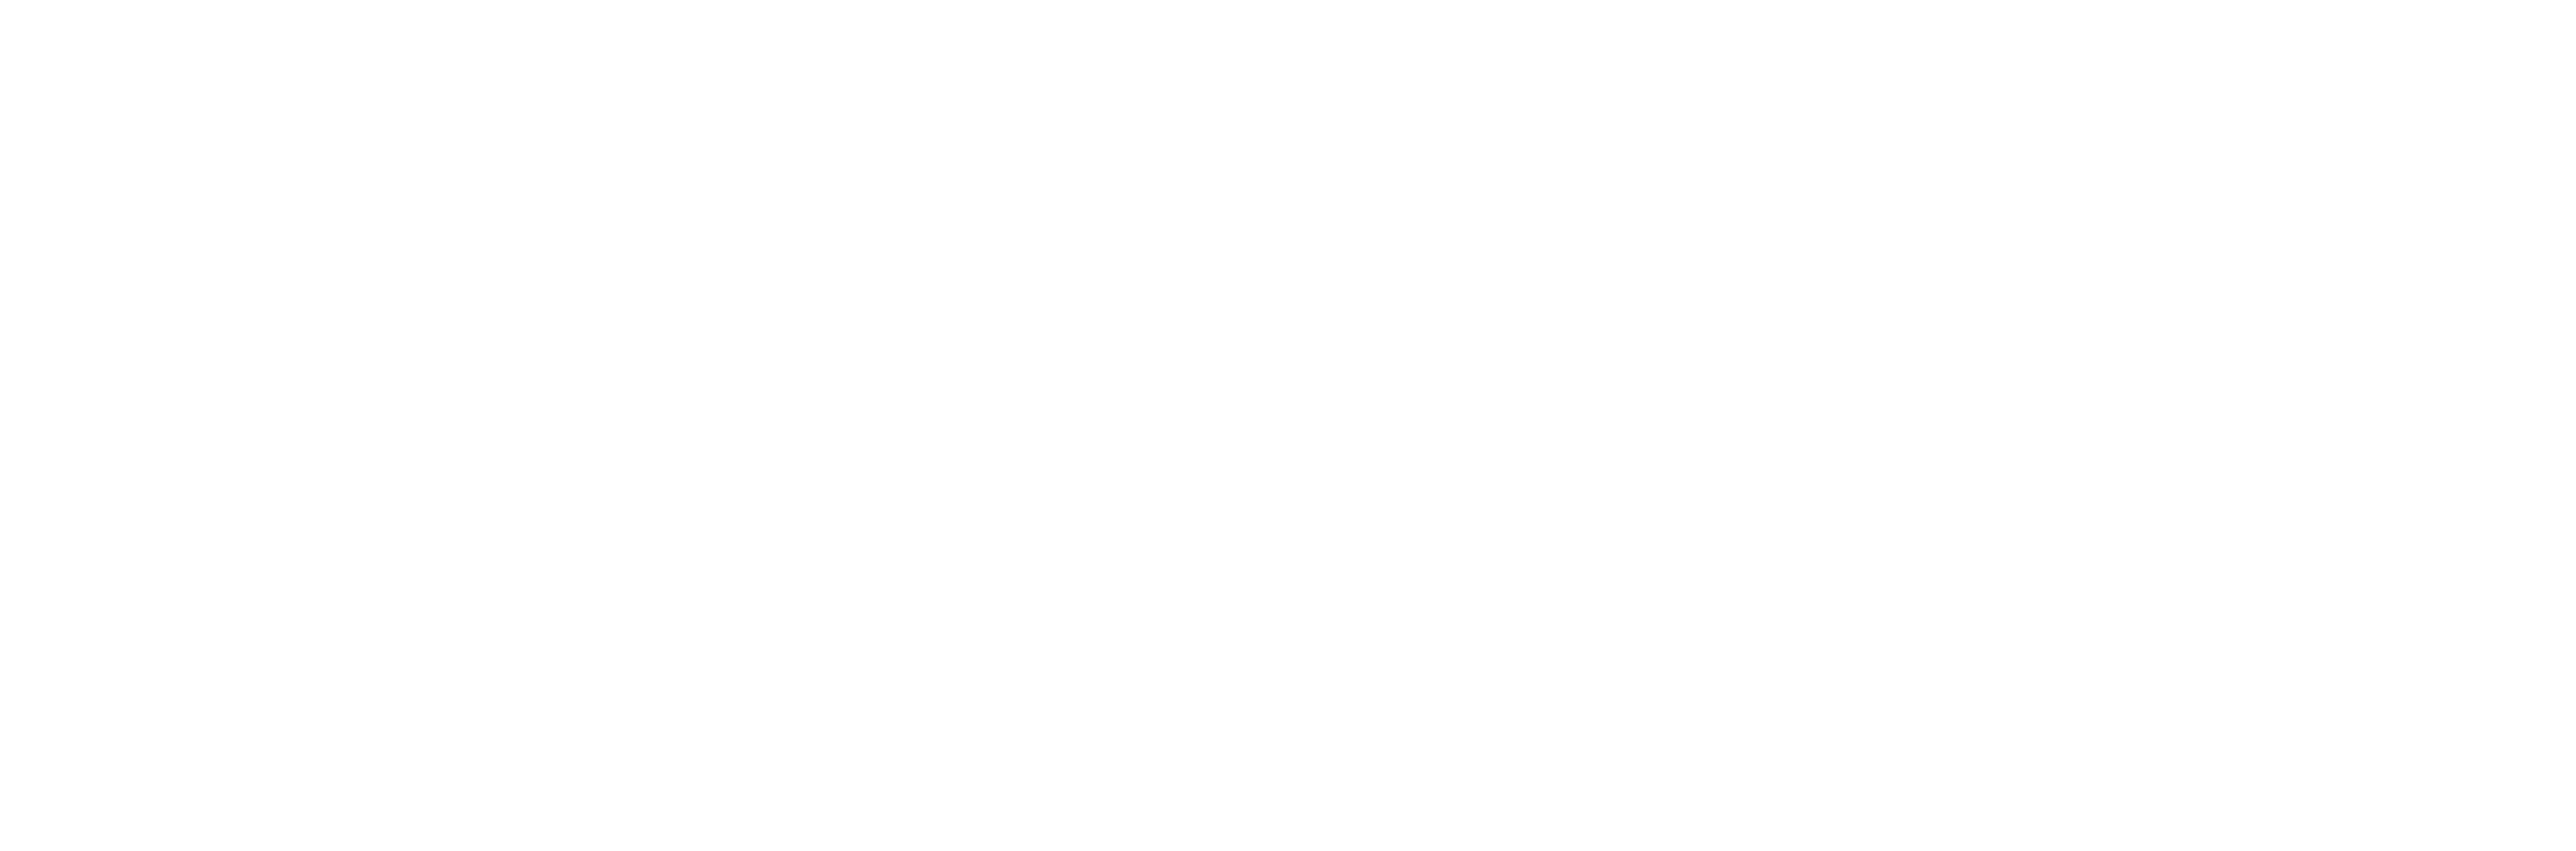 Grayson Perry: Rites of Passage logo